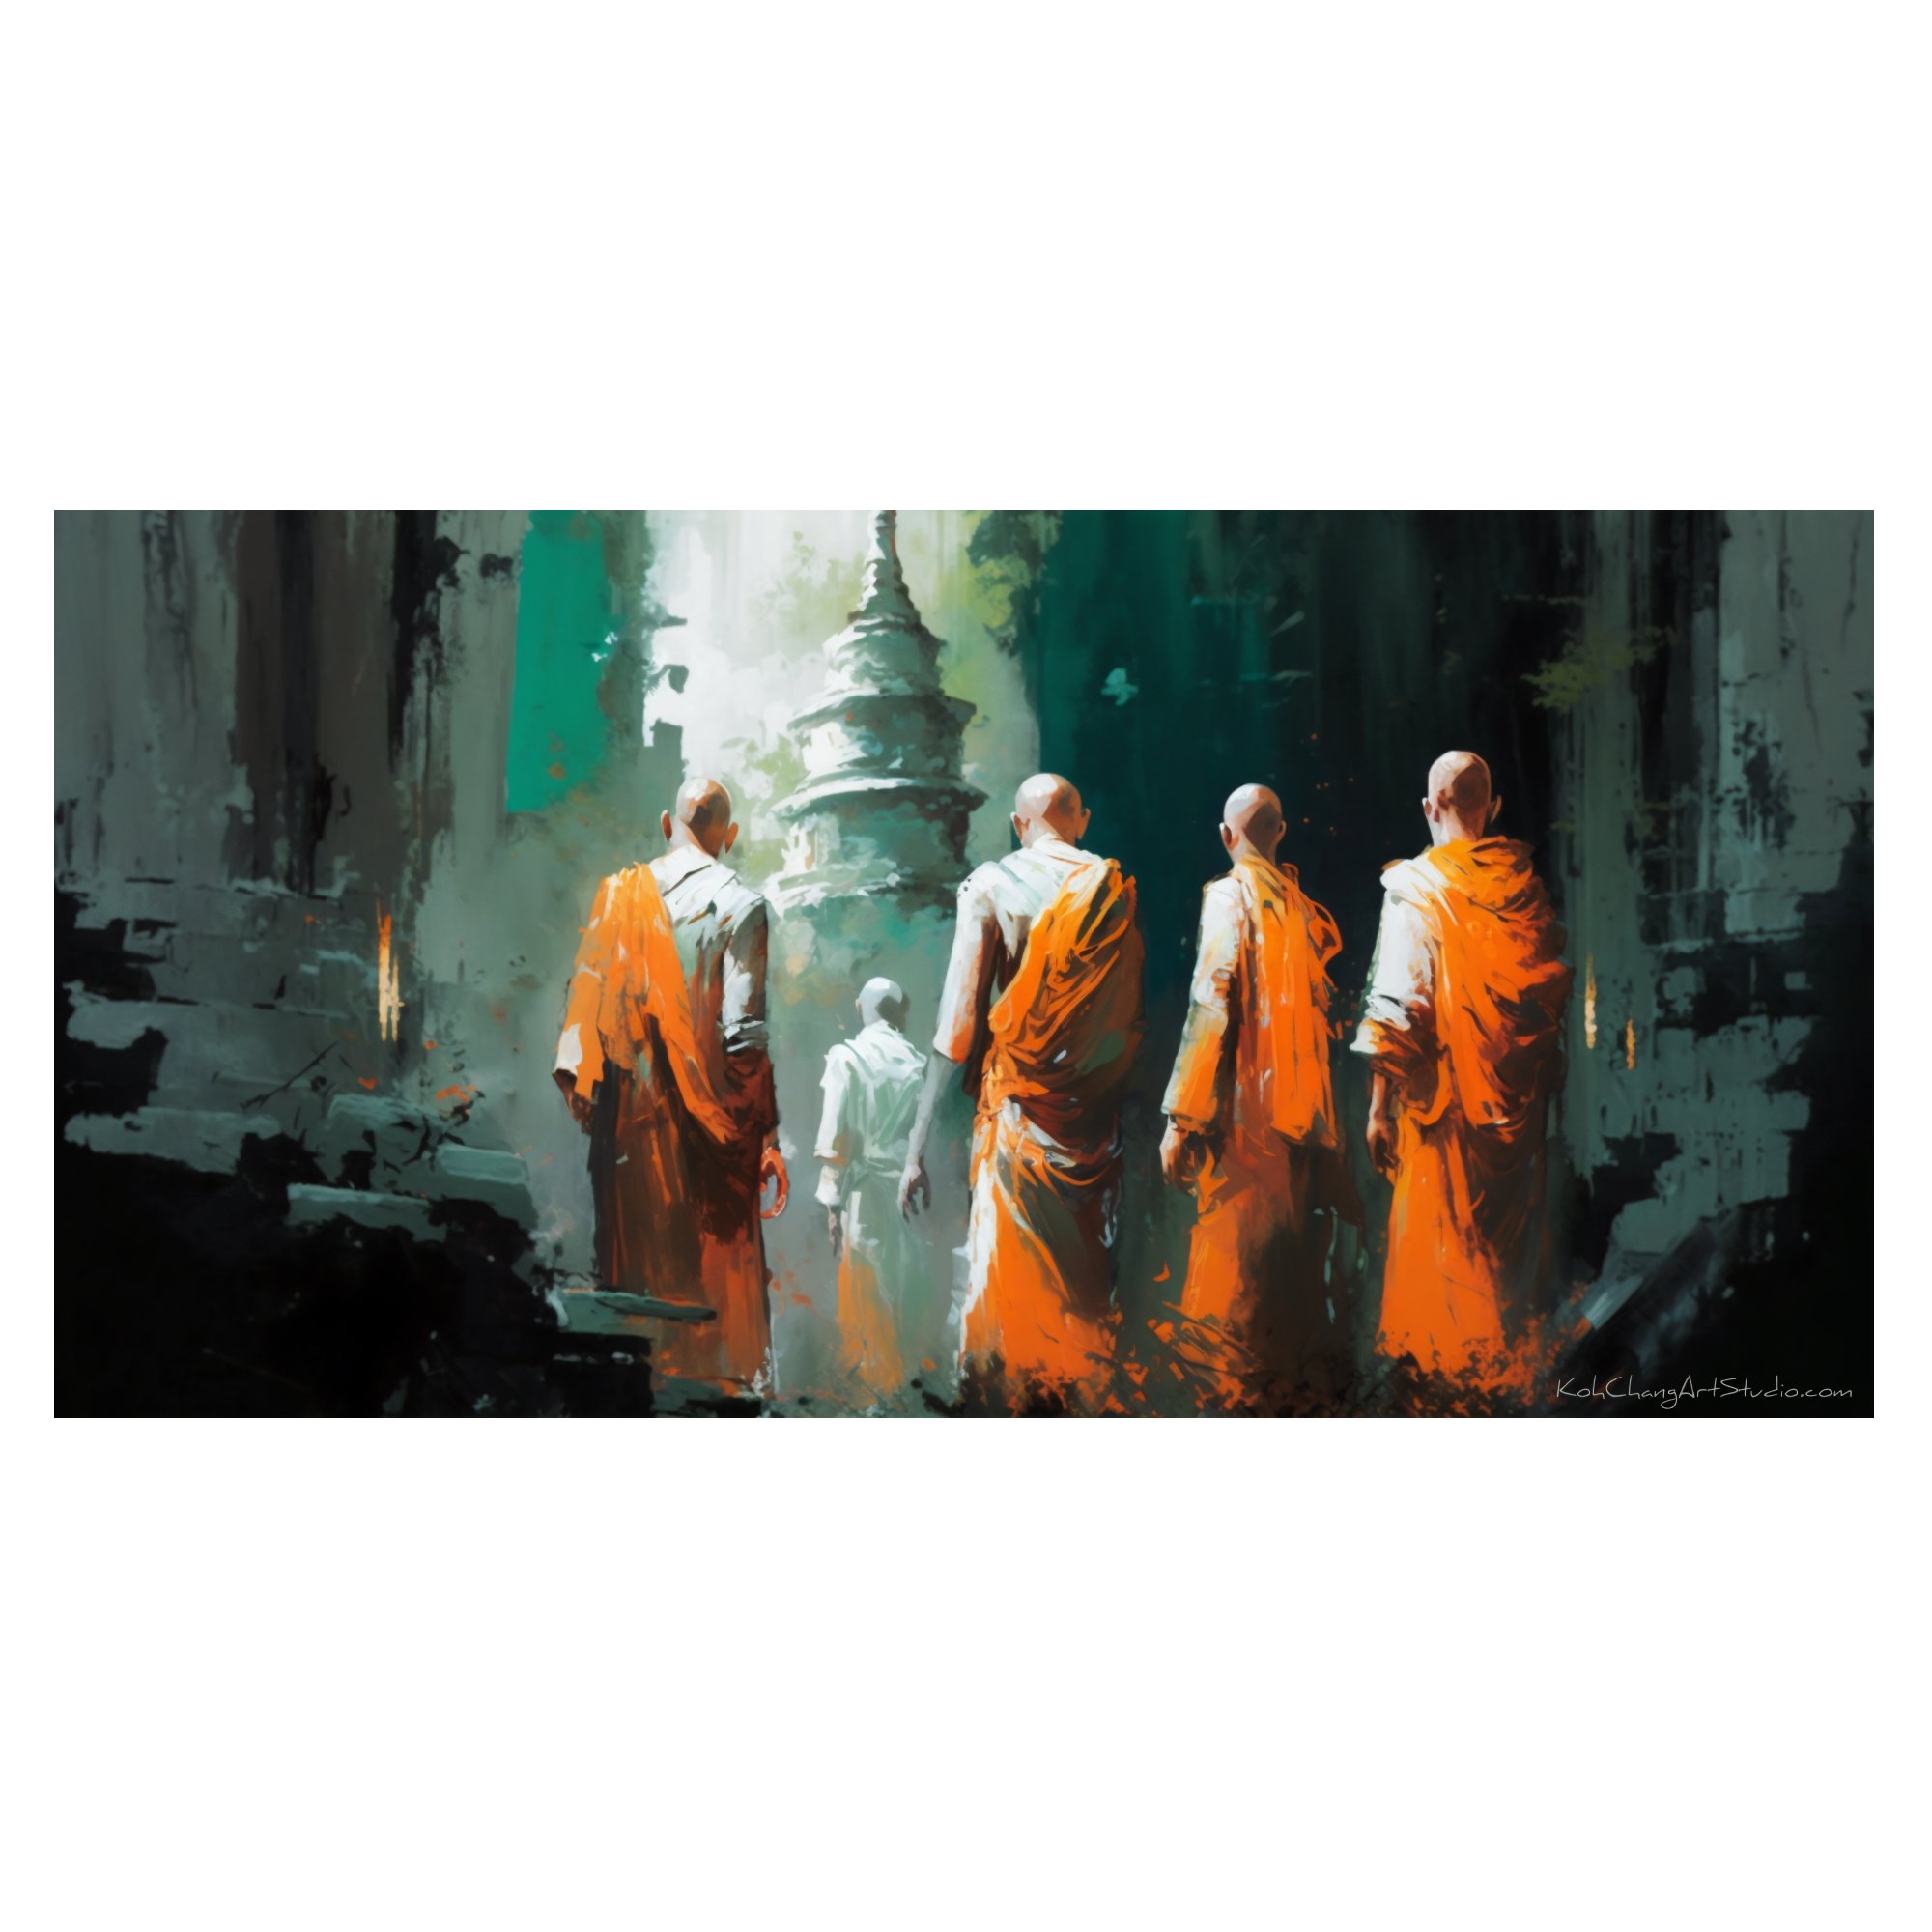 QUIET QUEST Depiction - Monks' pilgrimage towards a pagoda, symbolizing inner exploration.